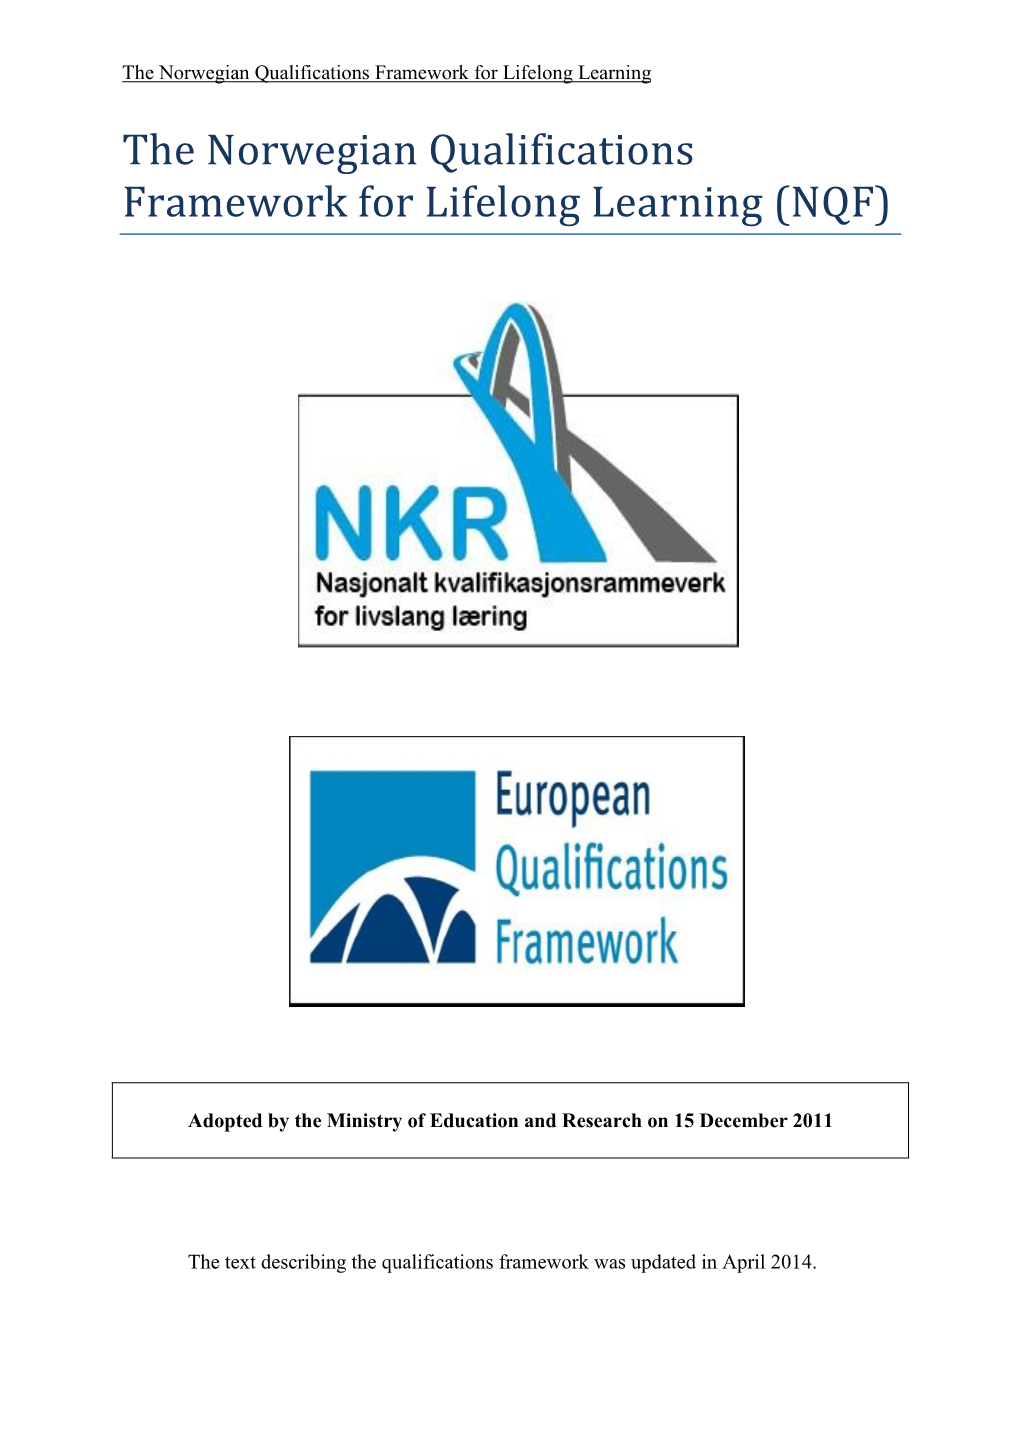 The Norwegian Qualifications Framework for Lifelong Learning